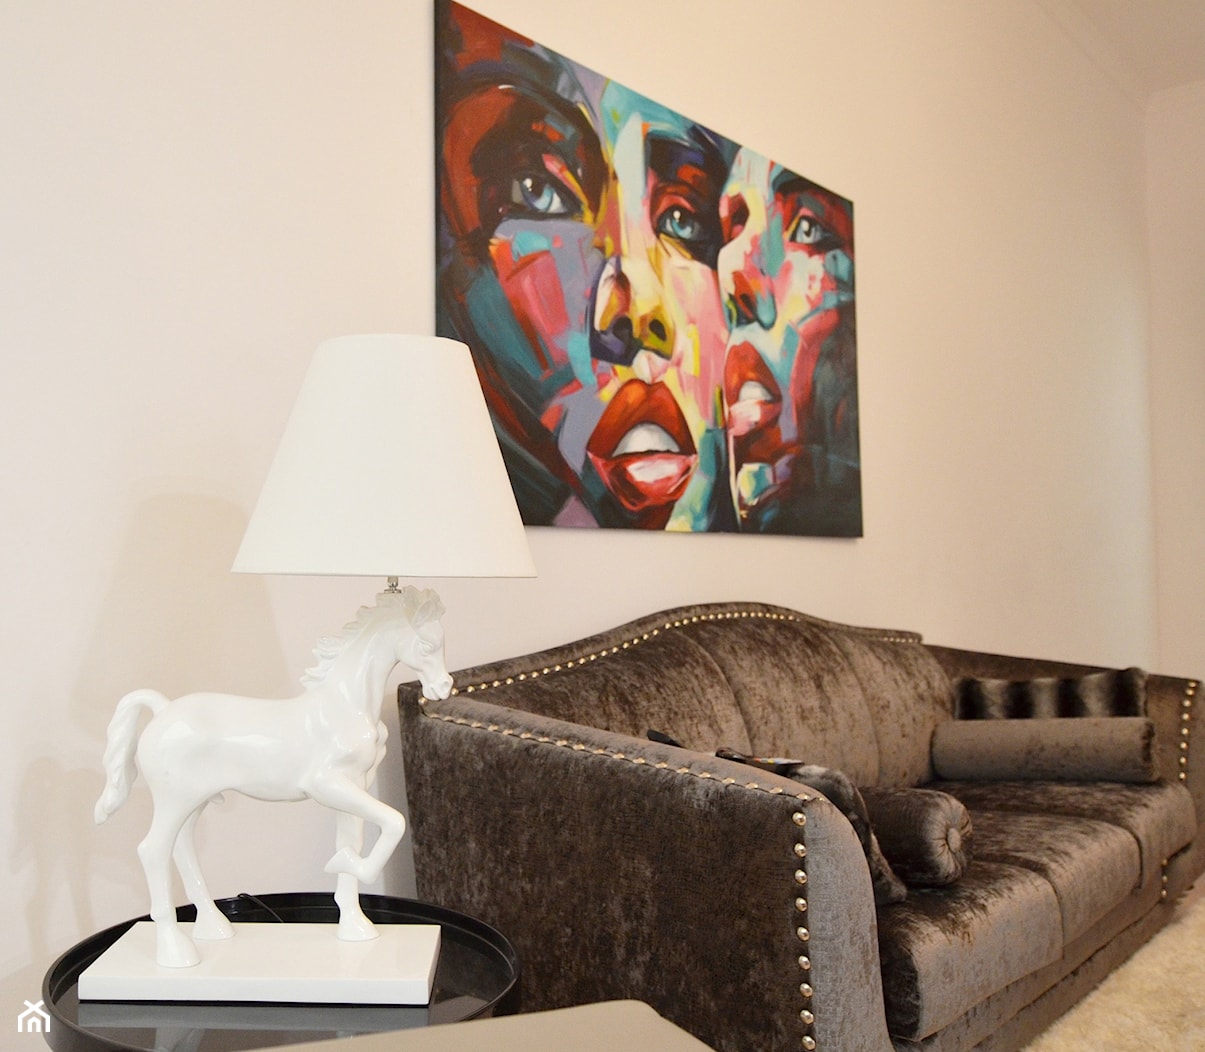 Apartament 250 m2 - Salon - zdjęcie od marga22 - Homebook